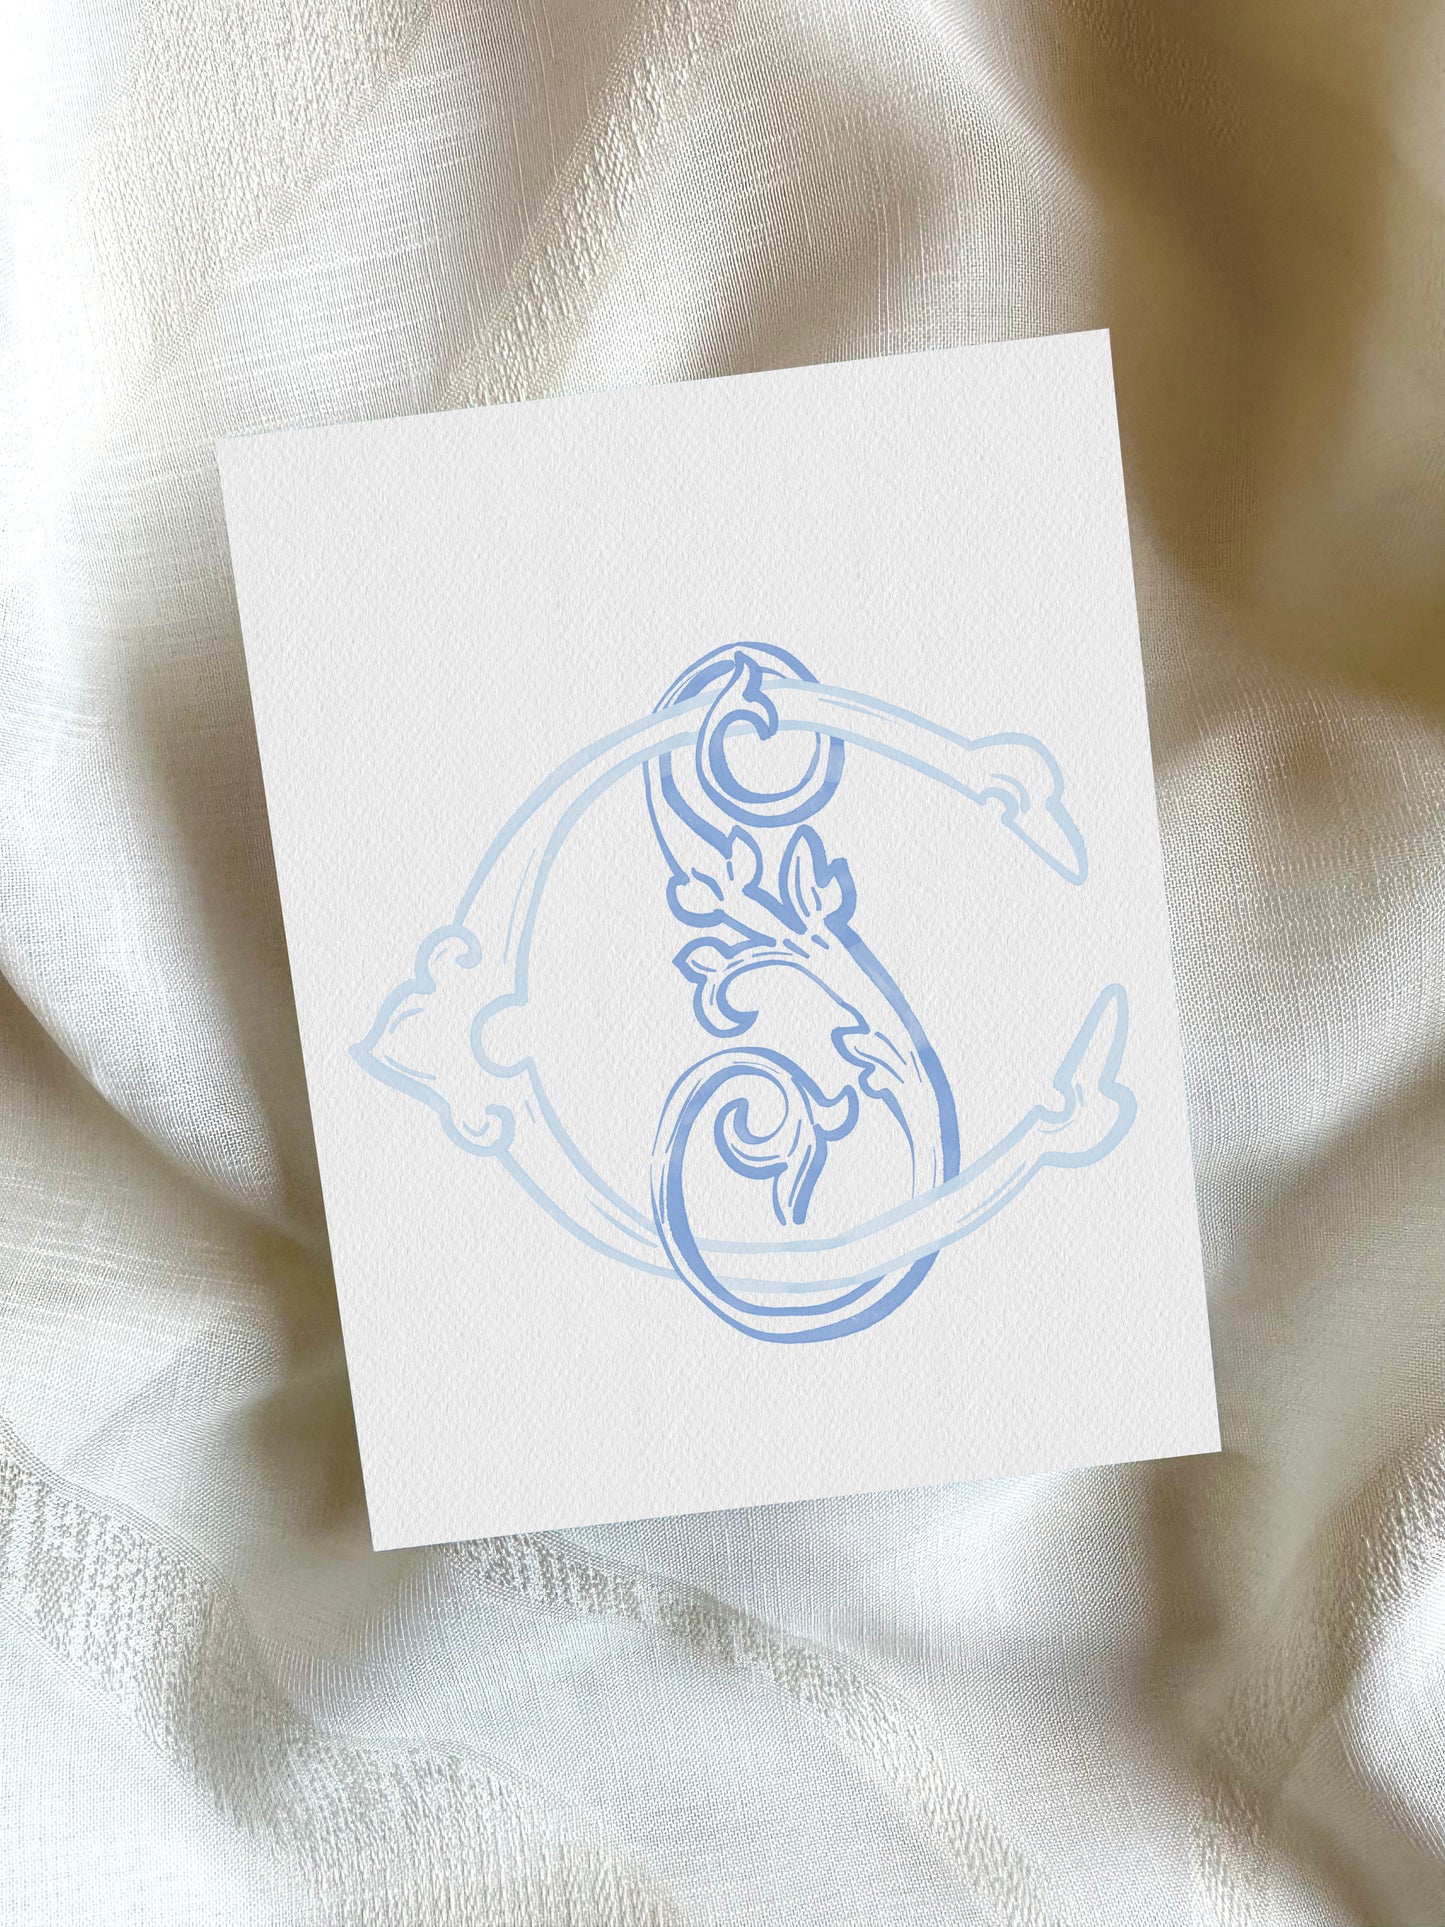 2 Letter Monogram with Letters CS SC | Digital Download - Wedding Monogram SVG, Personal Logo, Wedding Logo for Wedding Invitations The Wedding Crest Lab